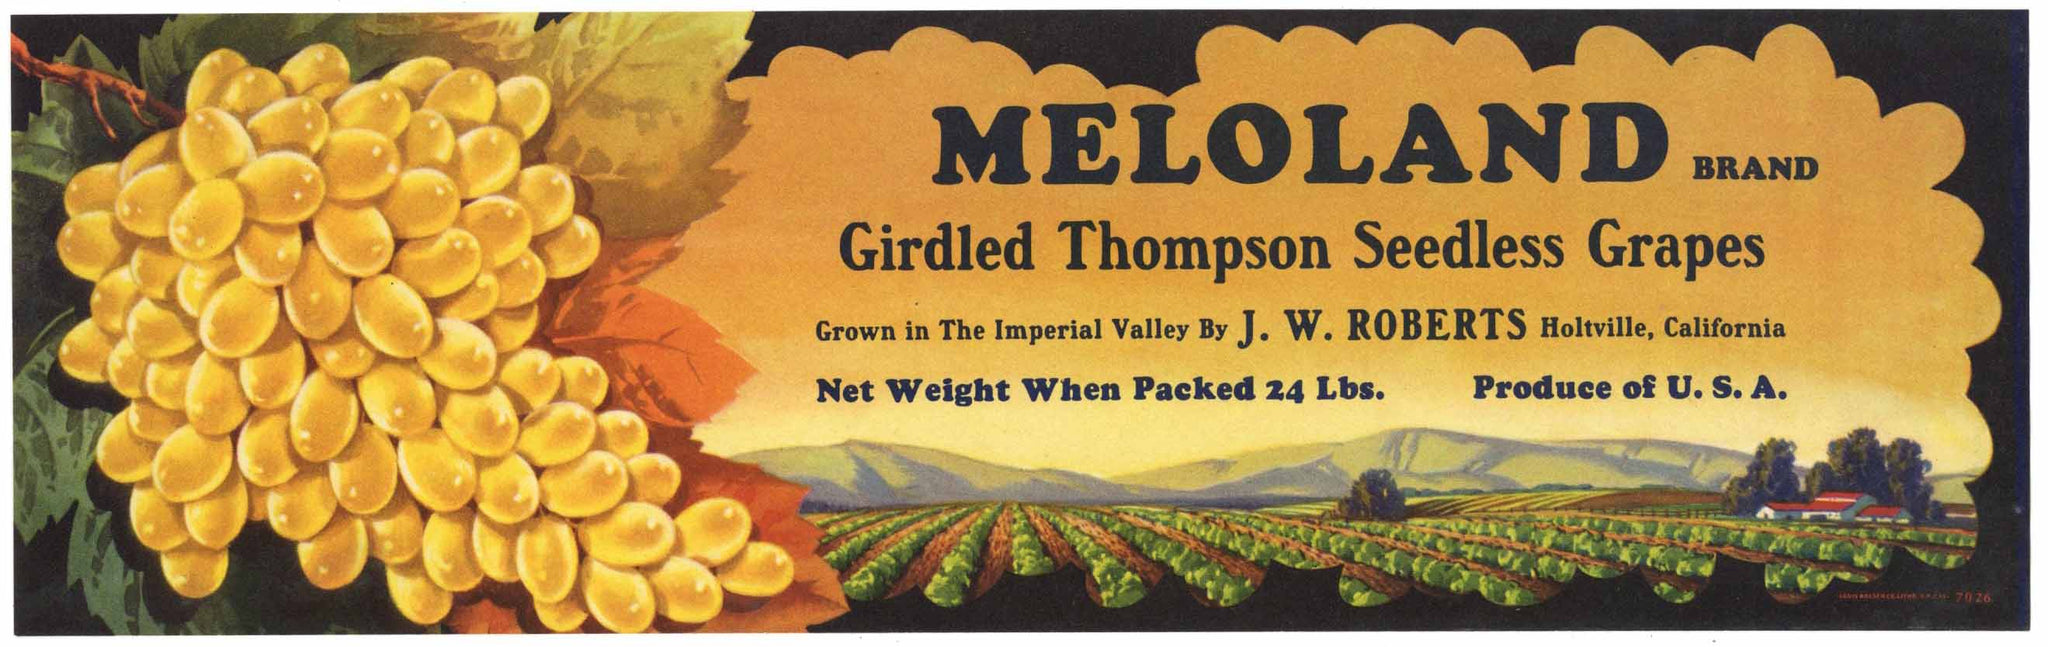 Meloland Brand Holtville California Grape Crate Label